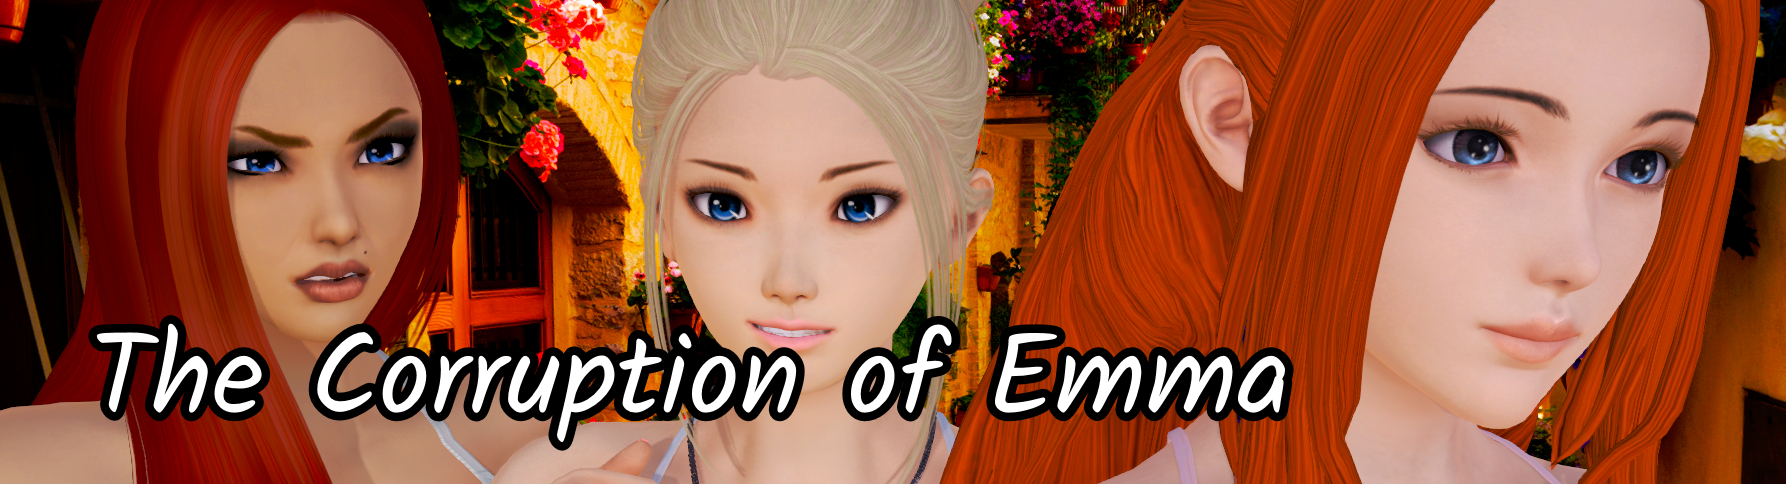 The Corruption of Emma [v0.10] main image